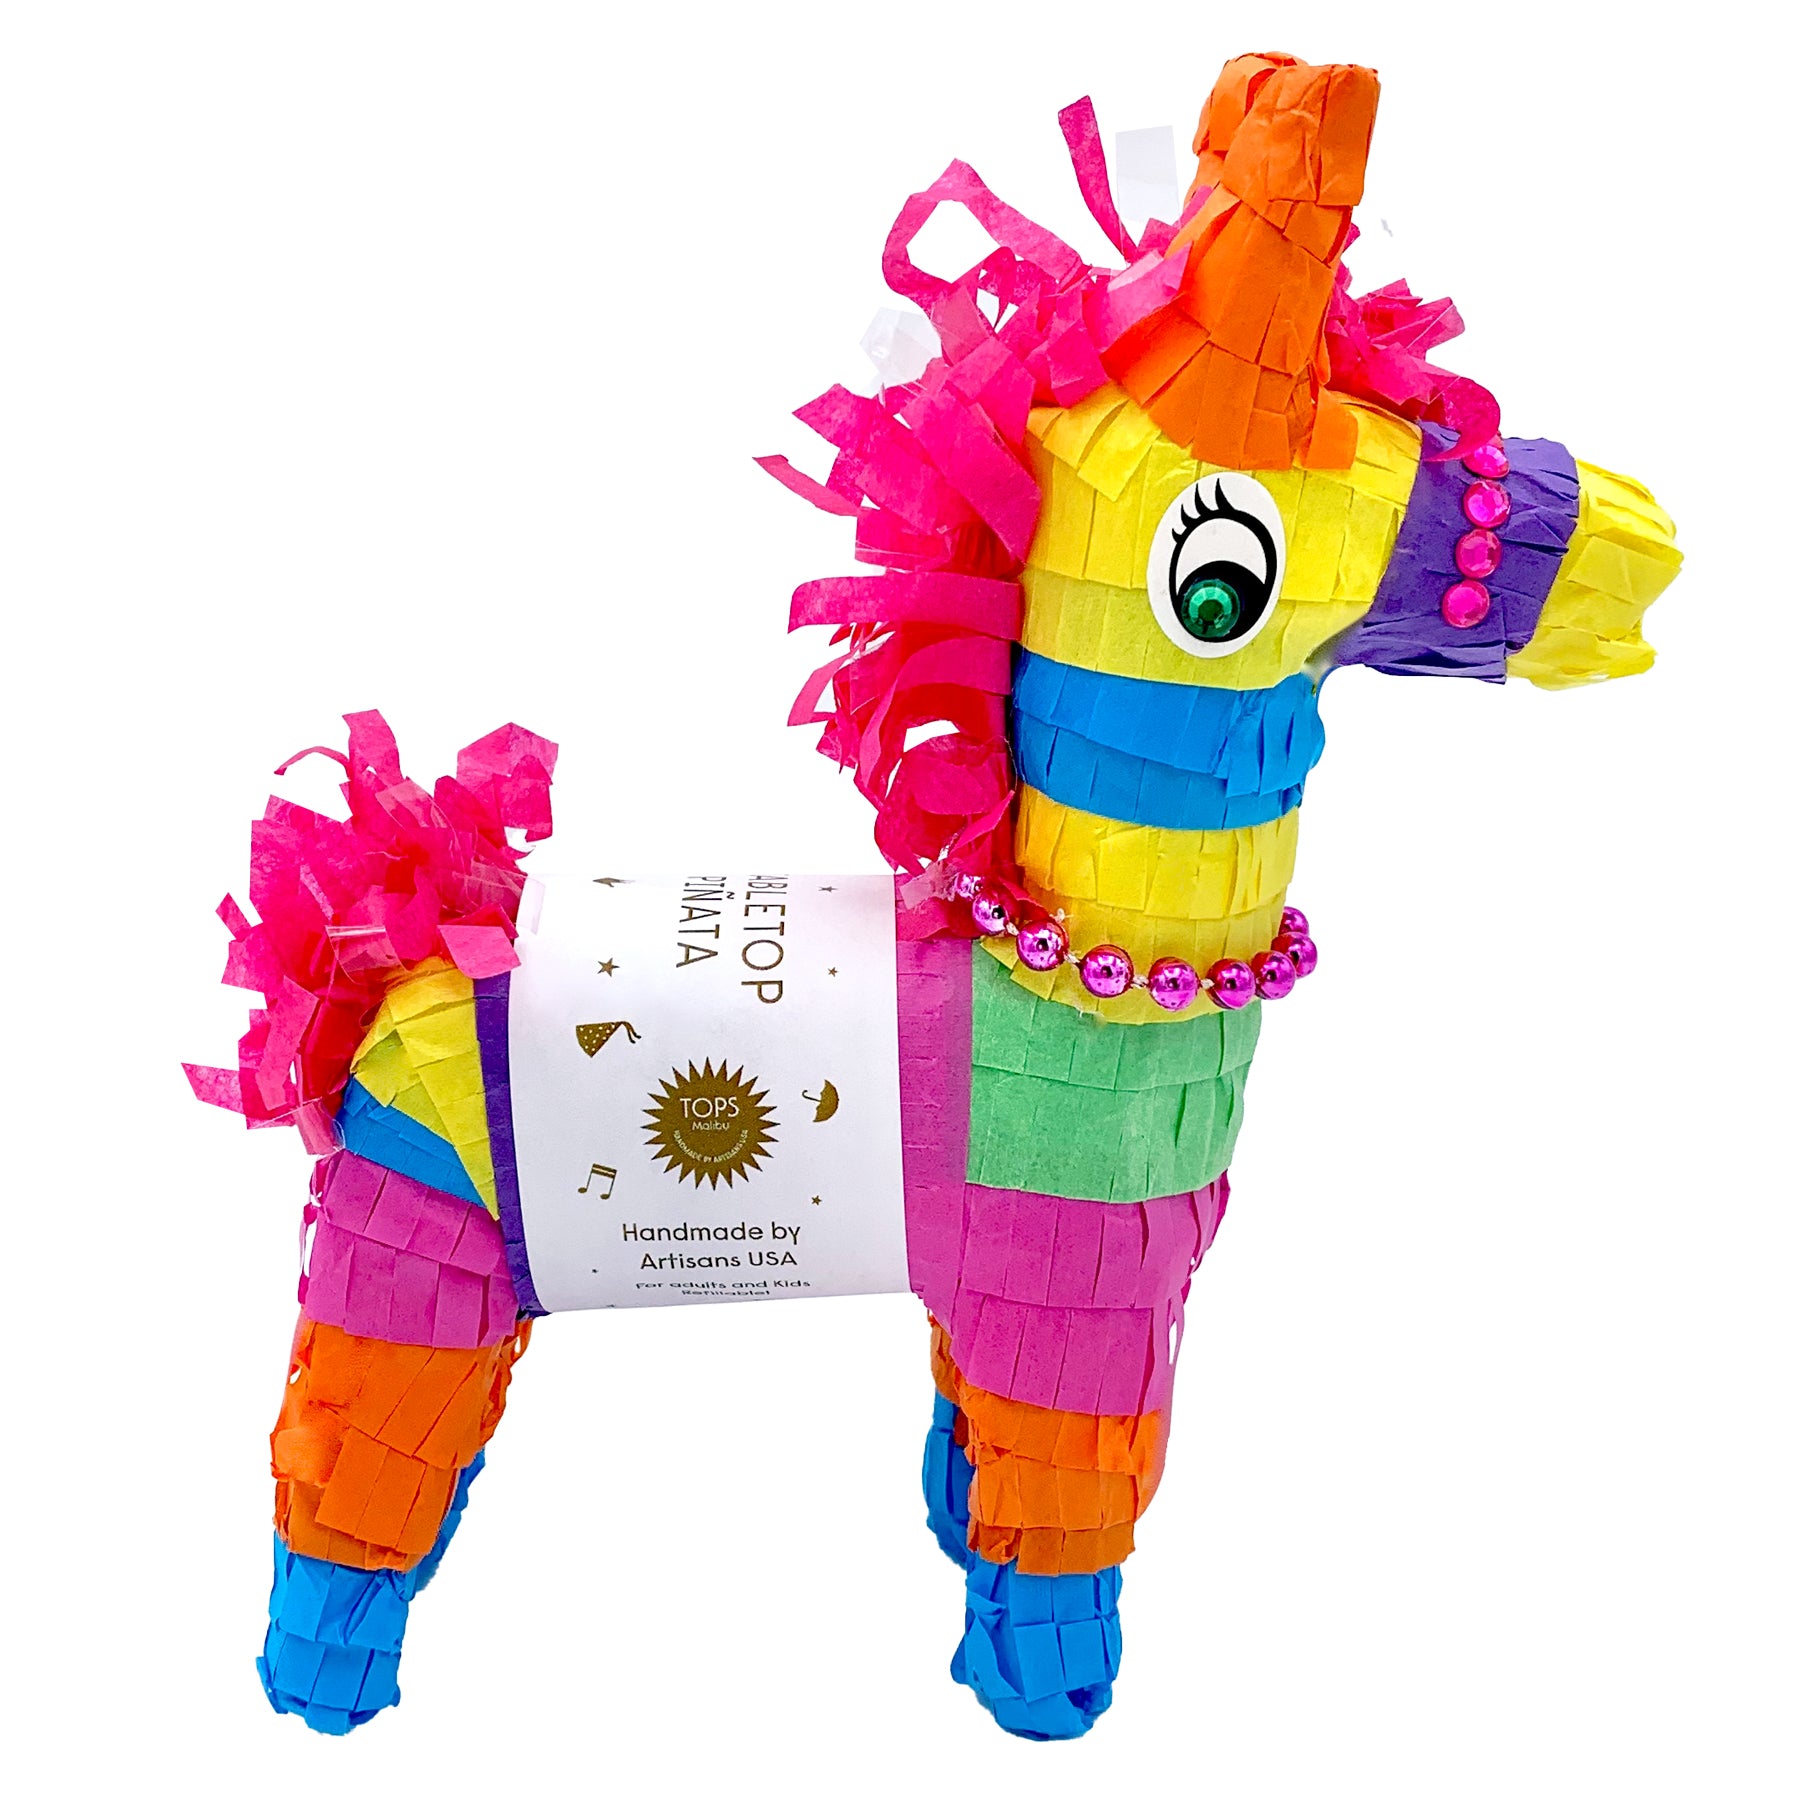 Tabletop Piñata (6 Prizes) - TOPS